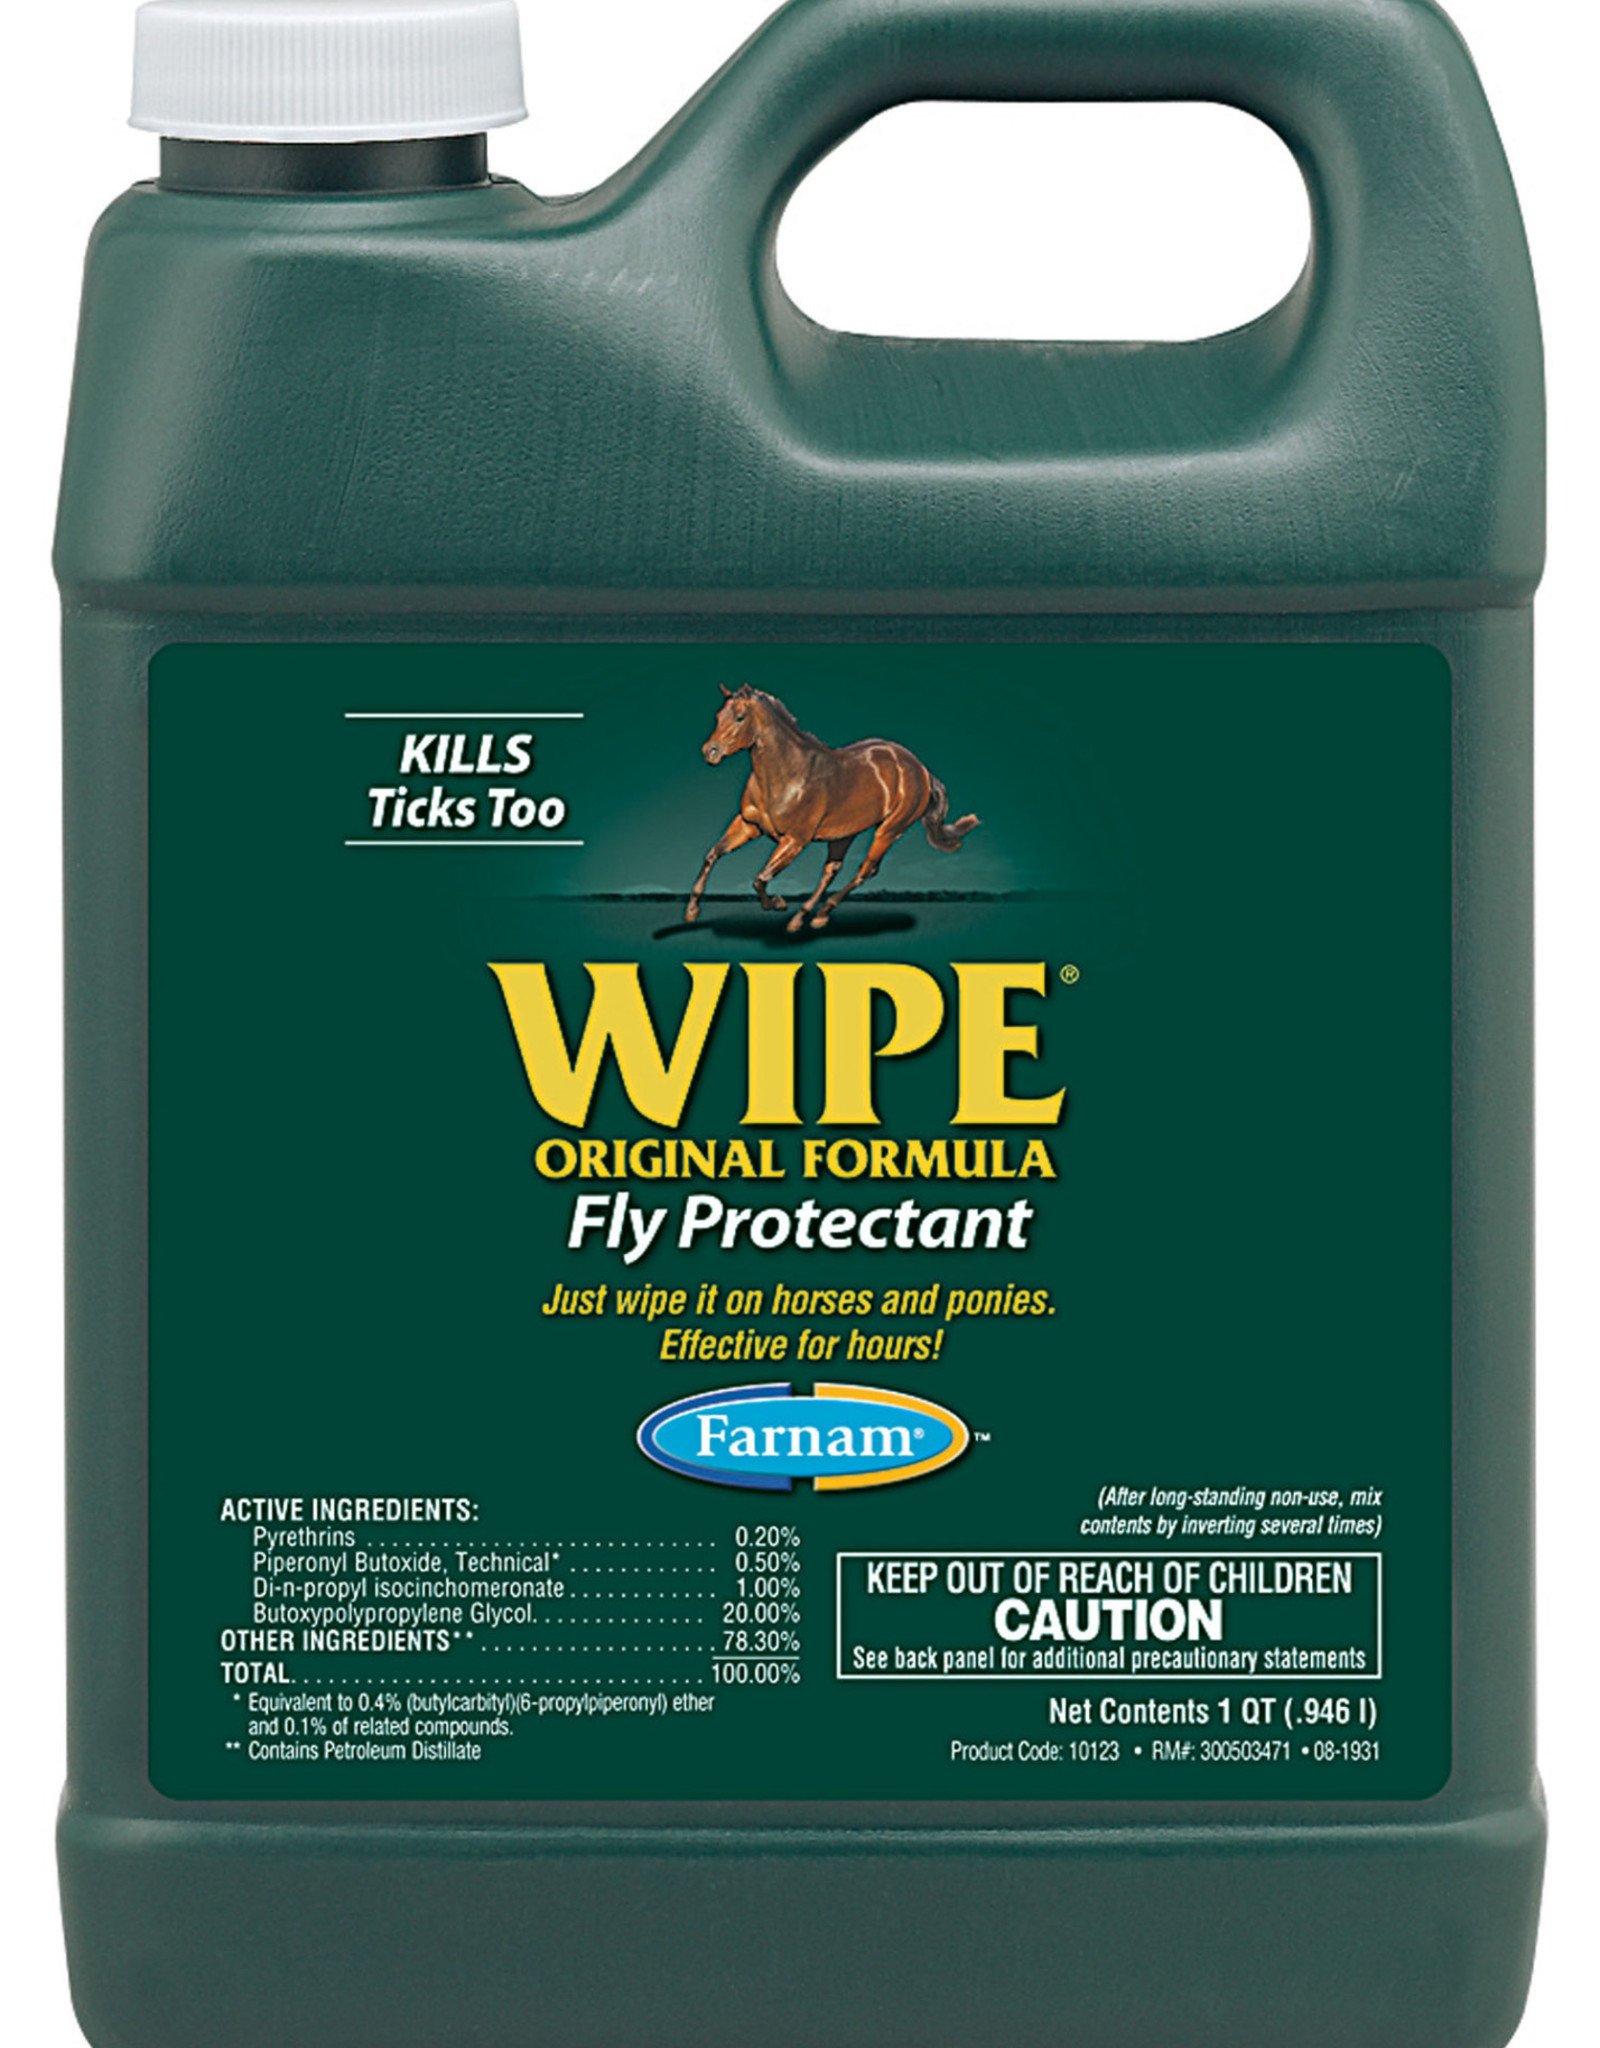 Wipe original formula Fly Protectant Quart